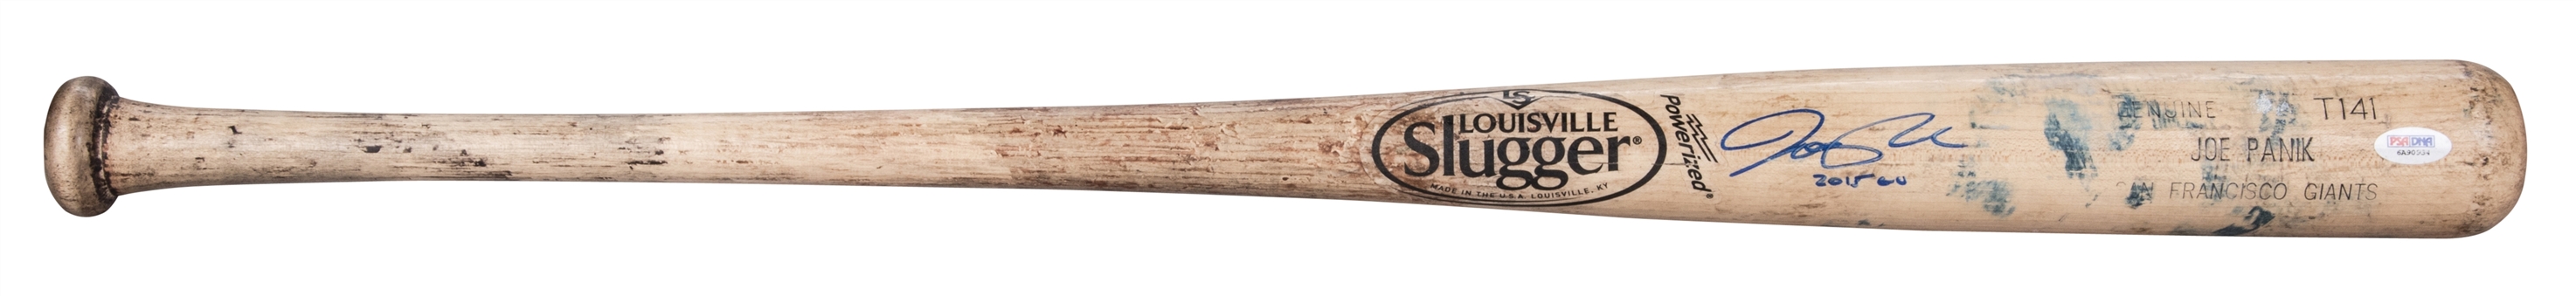 2015 Joe Panik Game Used and Signed Louisville Slugger T141 Model Bat (PSA/DNA GU 10)